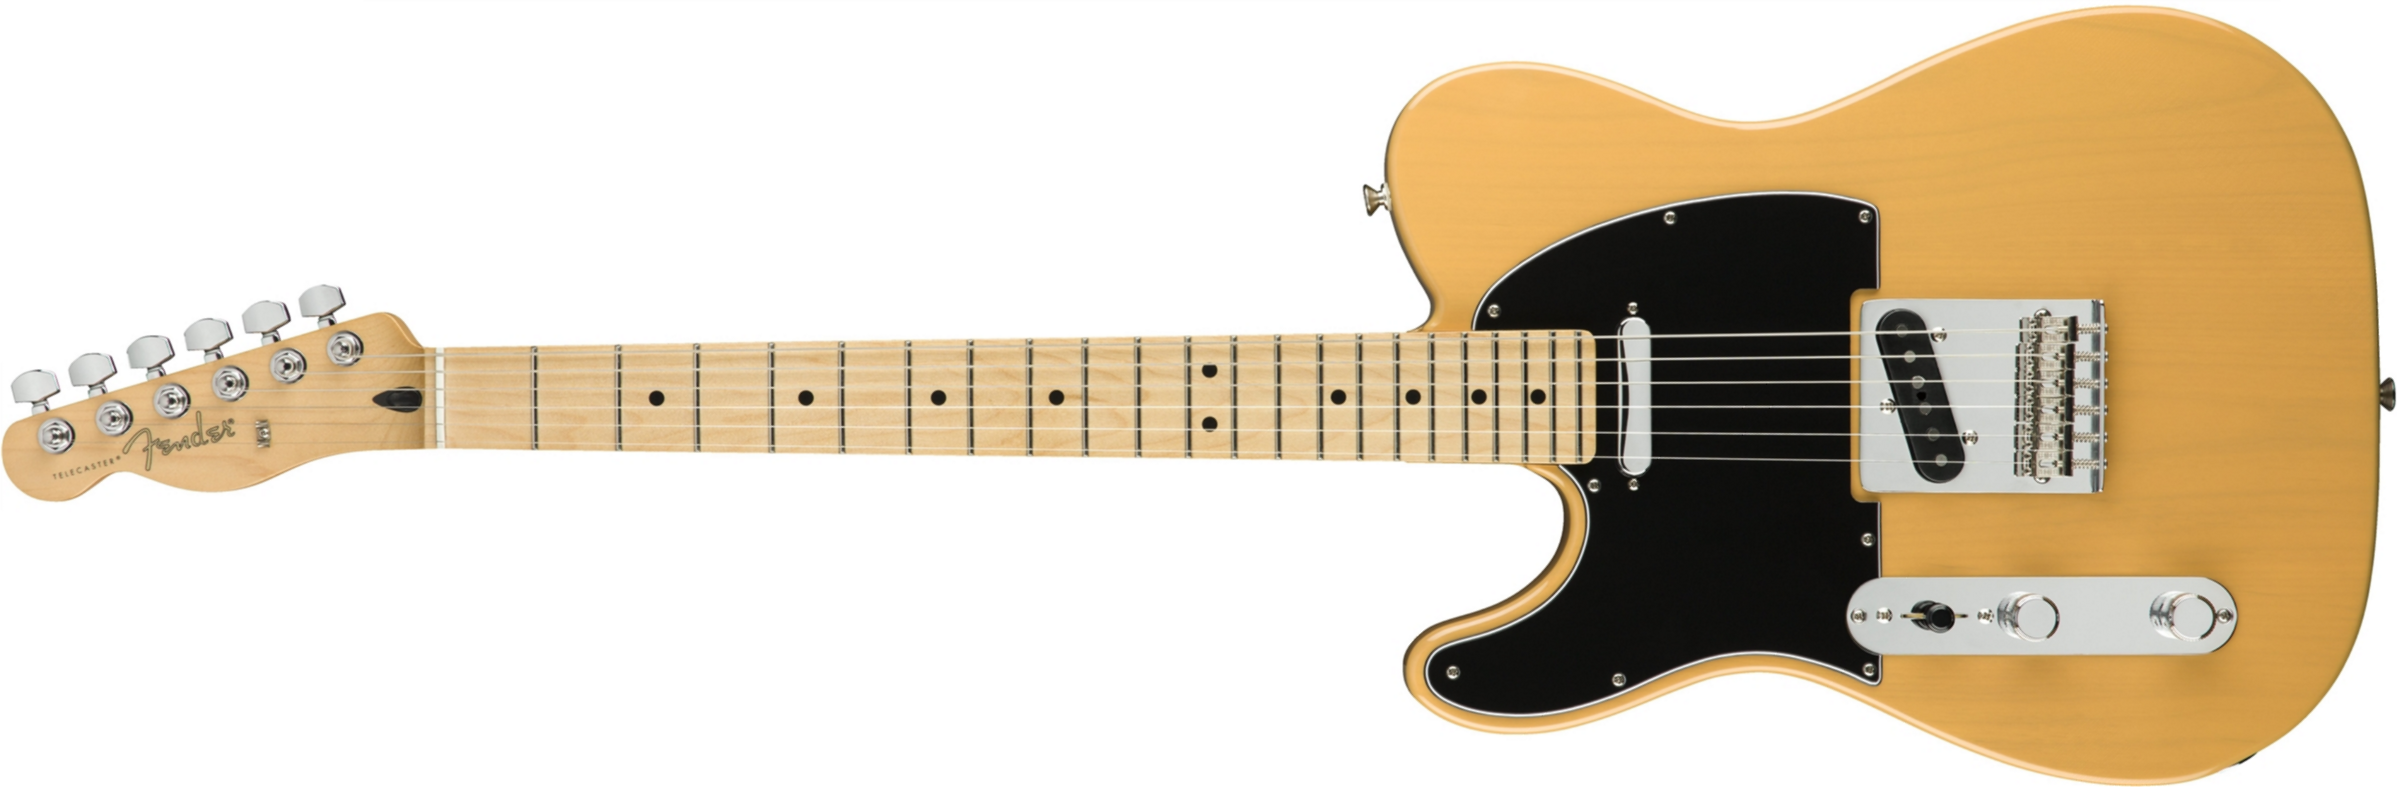 Fender Tele Player Lh Gaucher Mex 2s Mn - Butterscotch Blonde - Left-handed electric guitar - Main picture